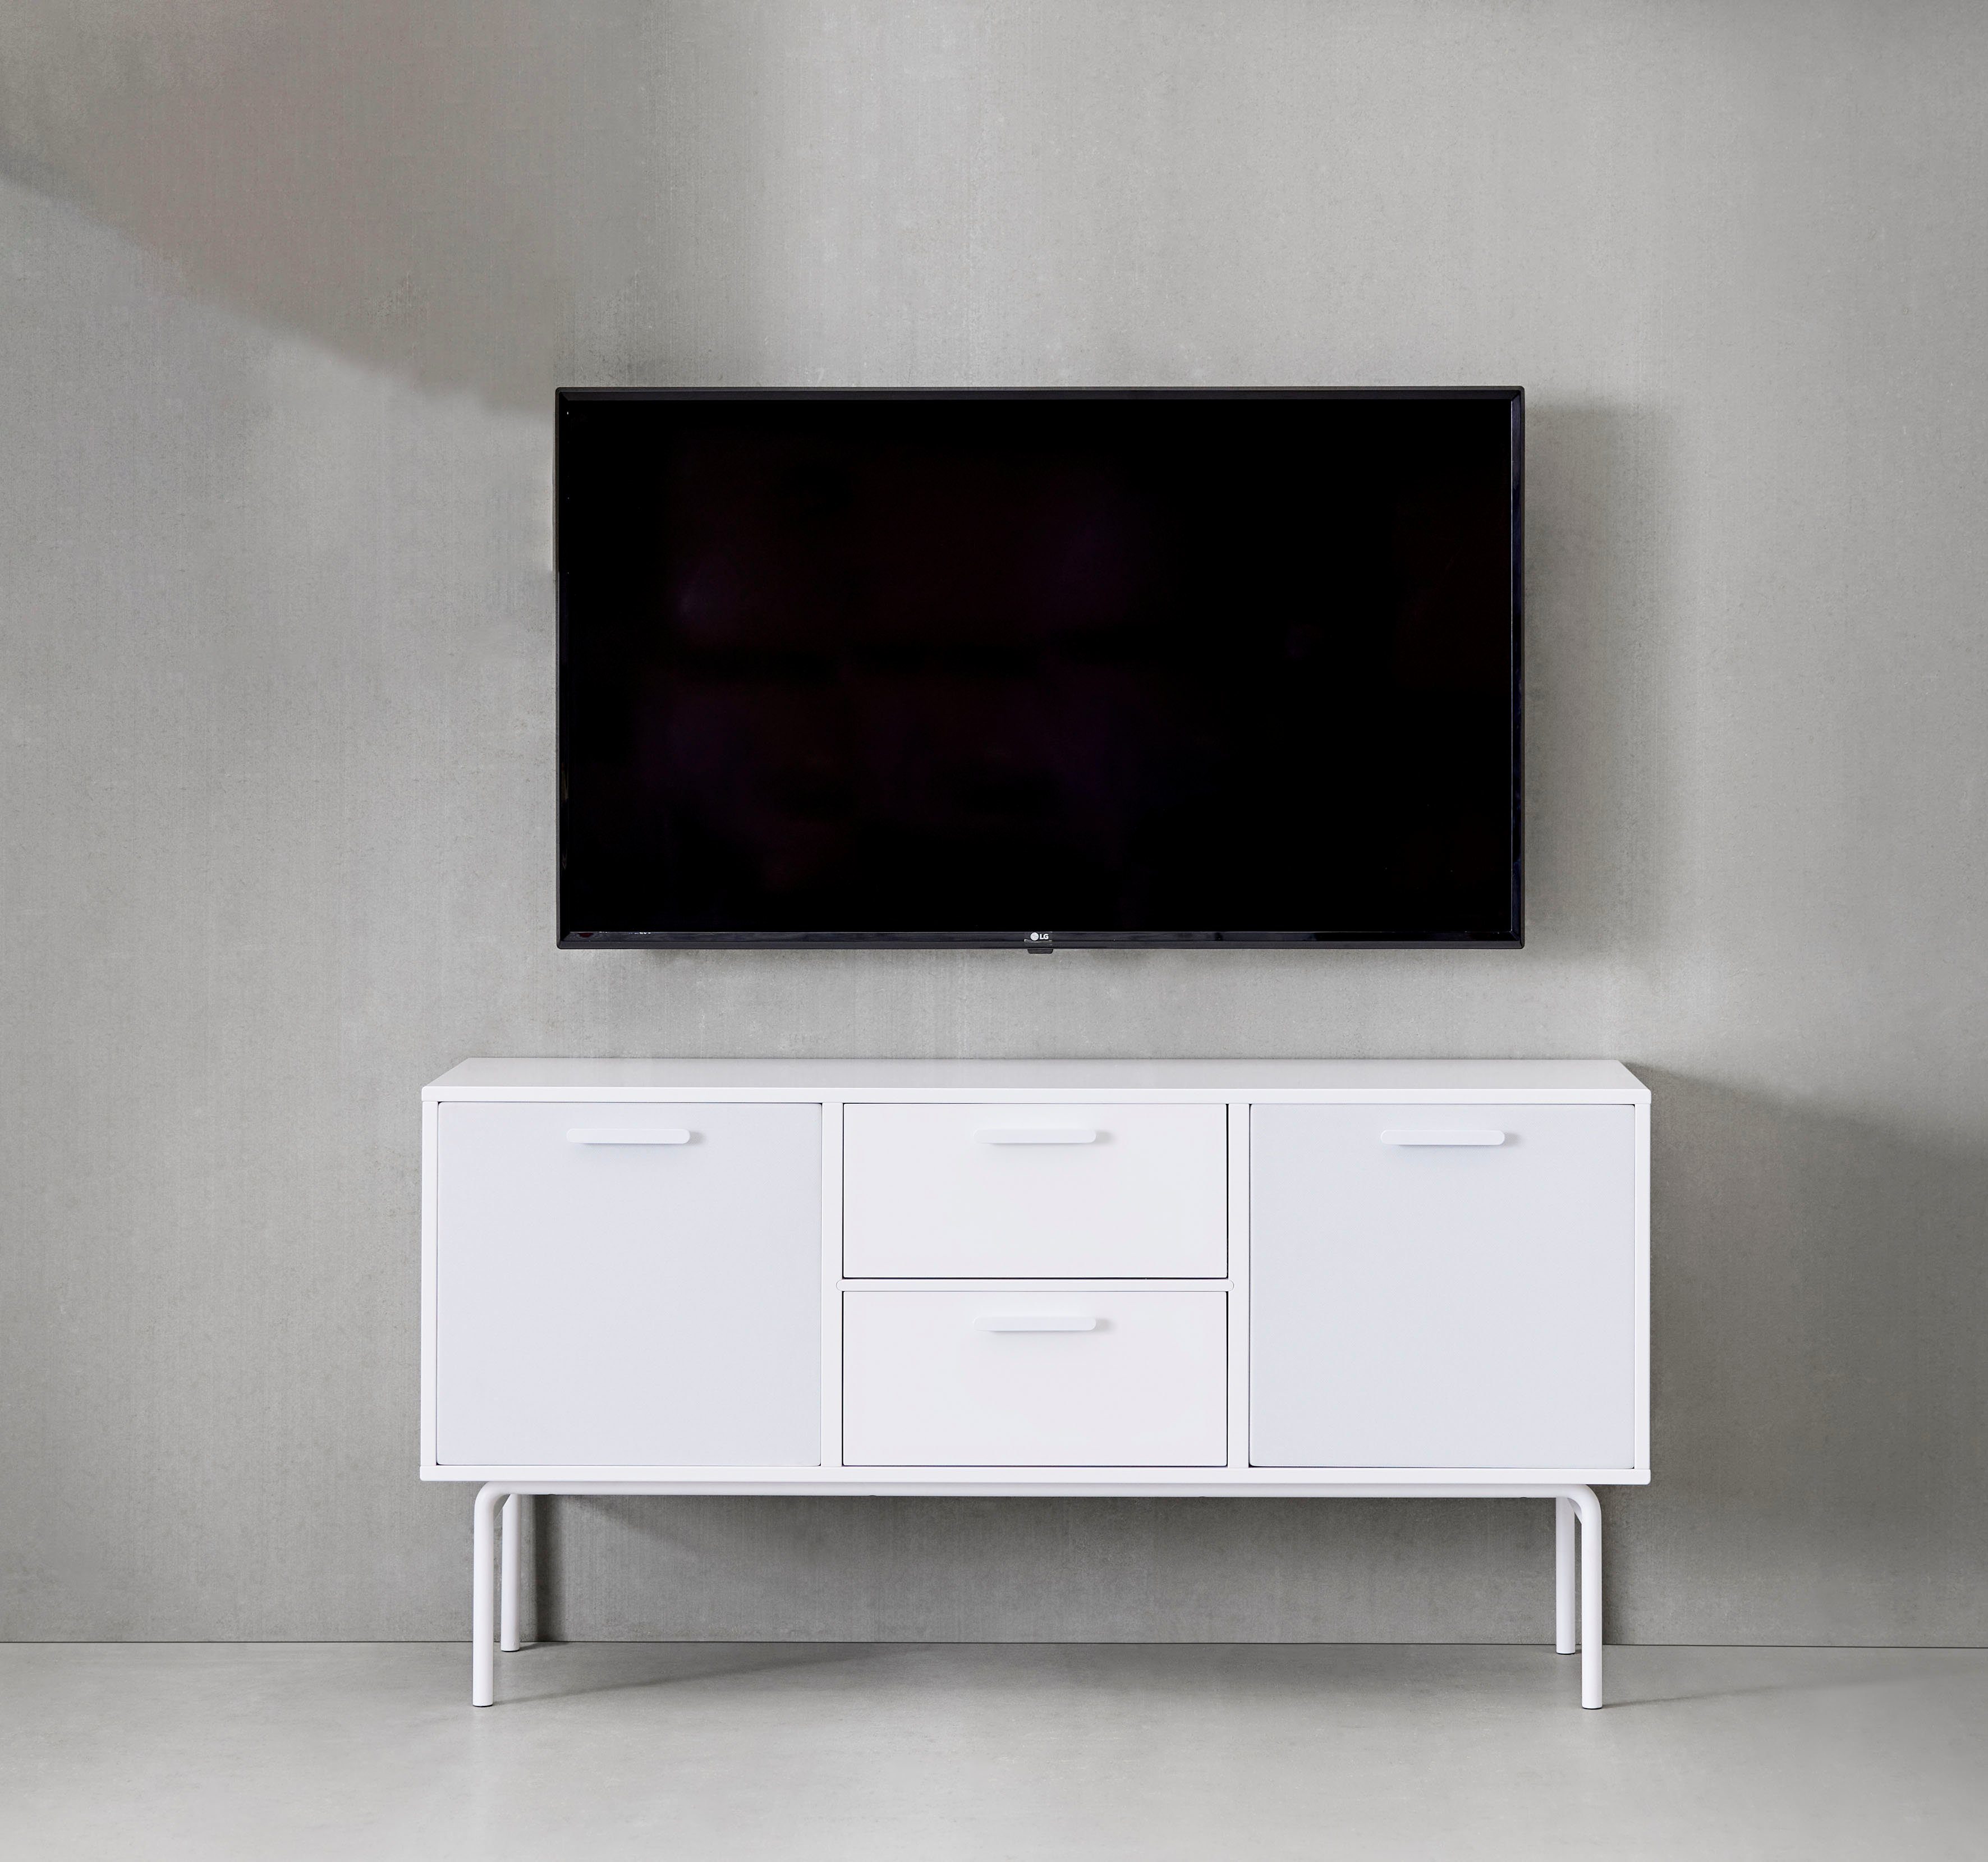 Hammel Furniture Media-Board Keep by Hammel, AV-Korpus auf Sockel, 2  Schubladen und 2 Stofftüren, Breite 113,8 cm